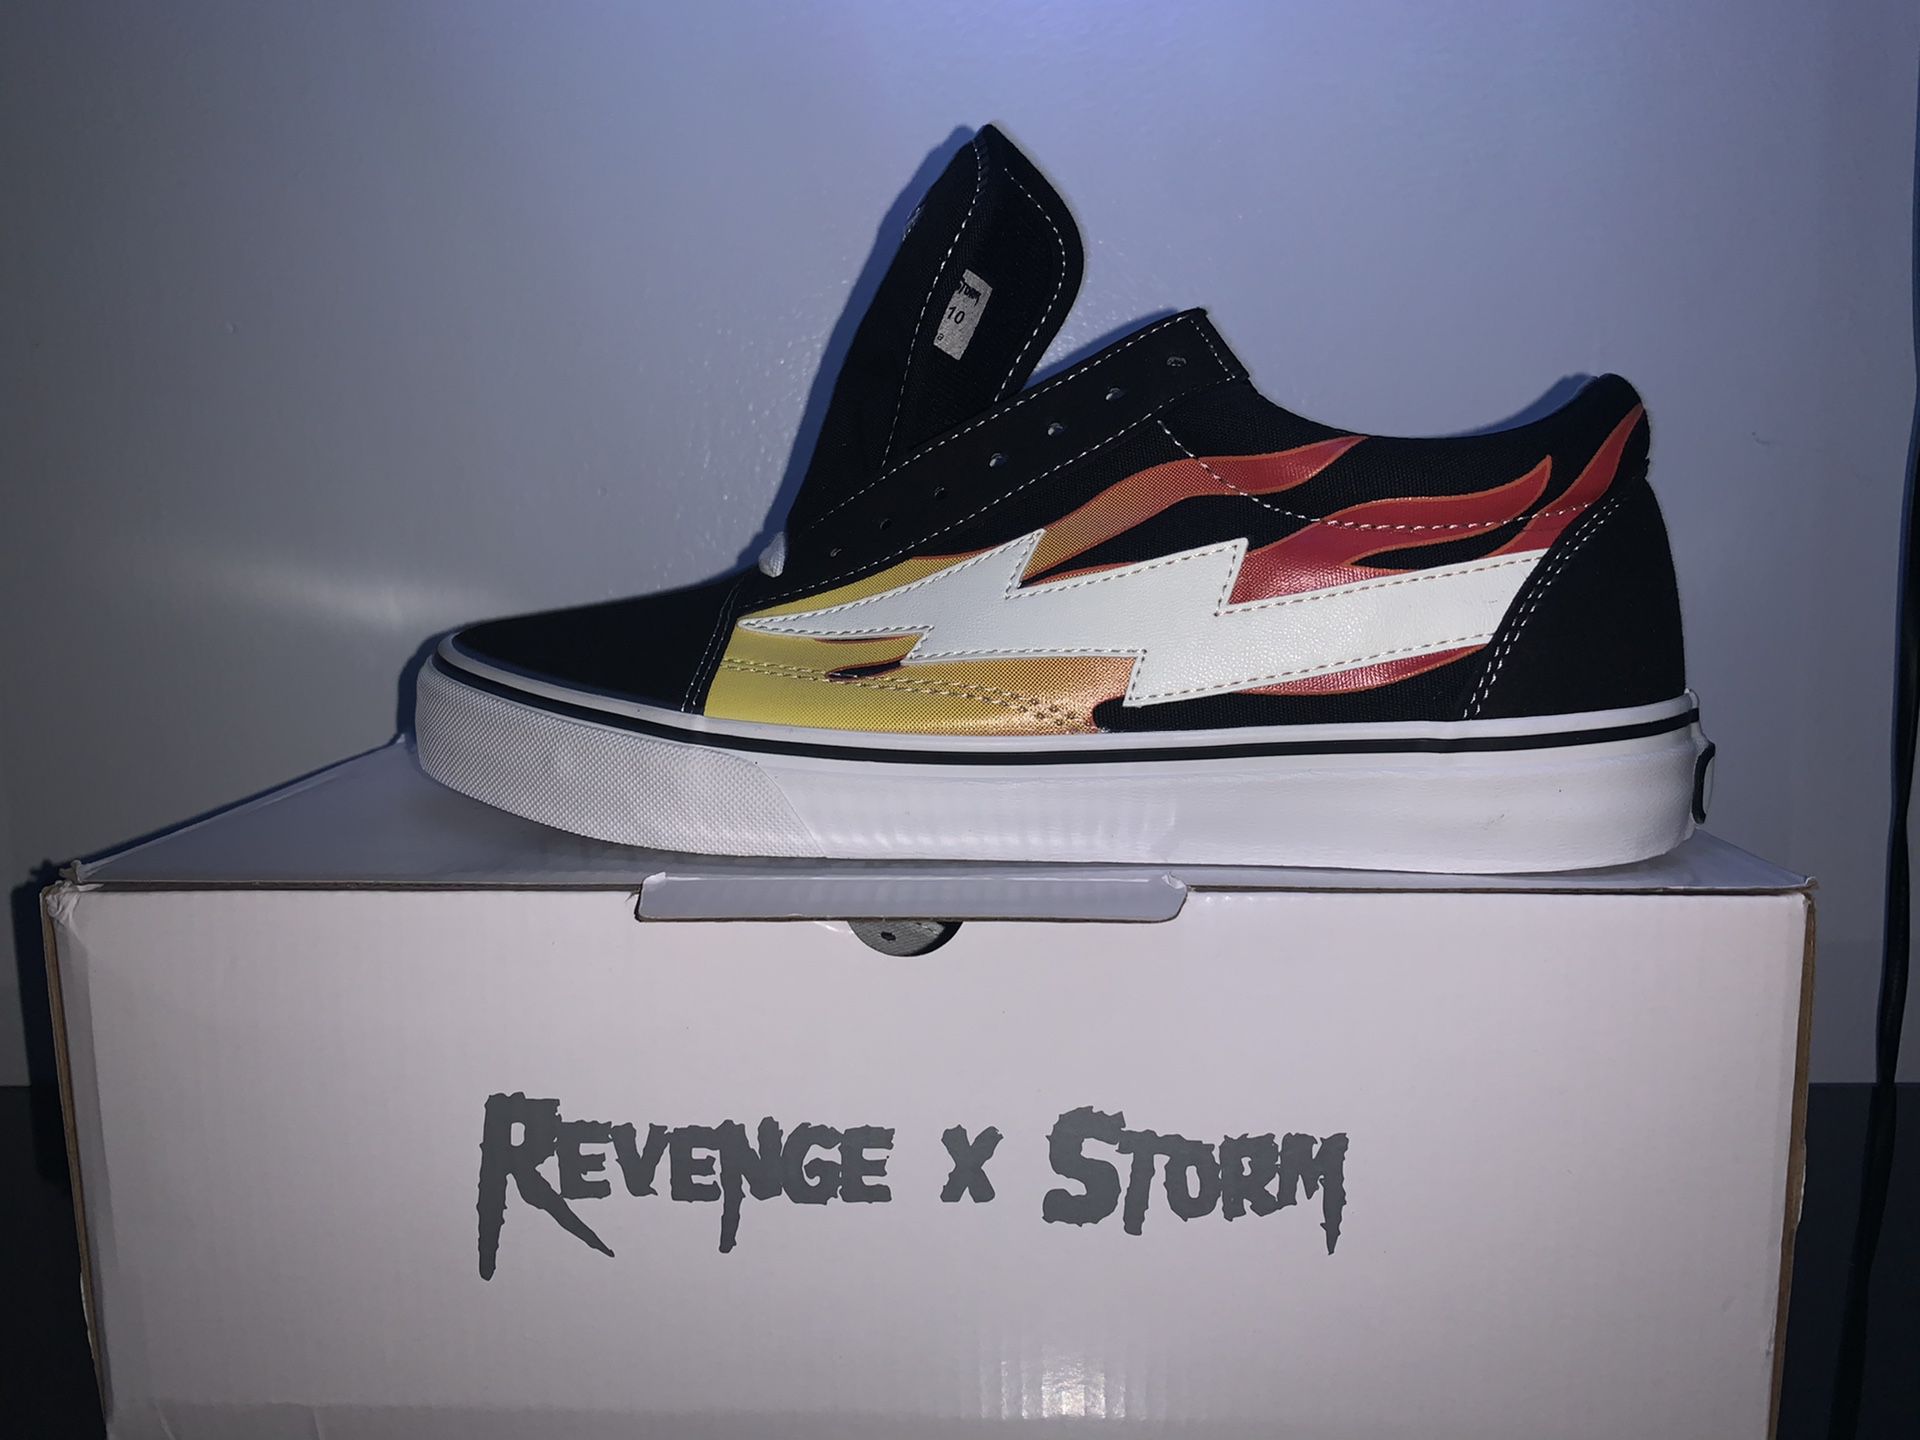 Revenge x Storm